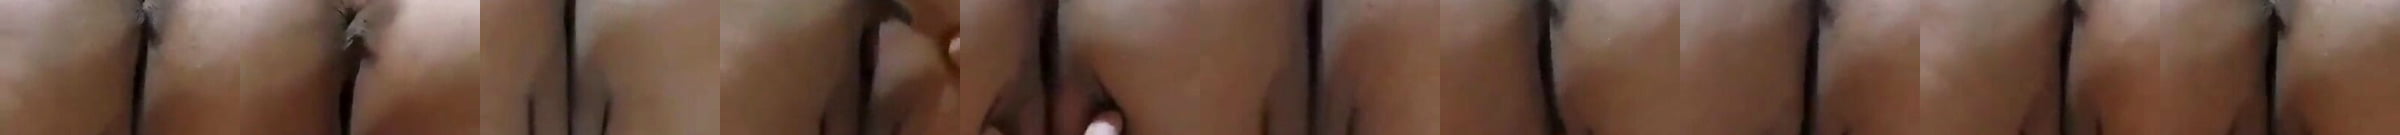 Motigandauntysex - Featured Desi Moti Gand Aunty Sex Porn Videos XhamsterSexiezPix Web Porn